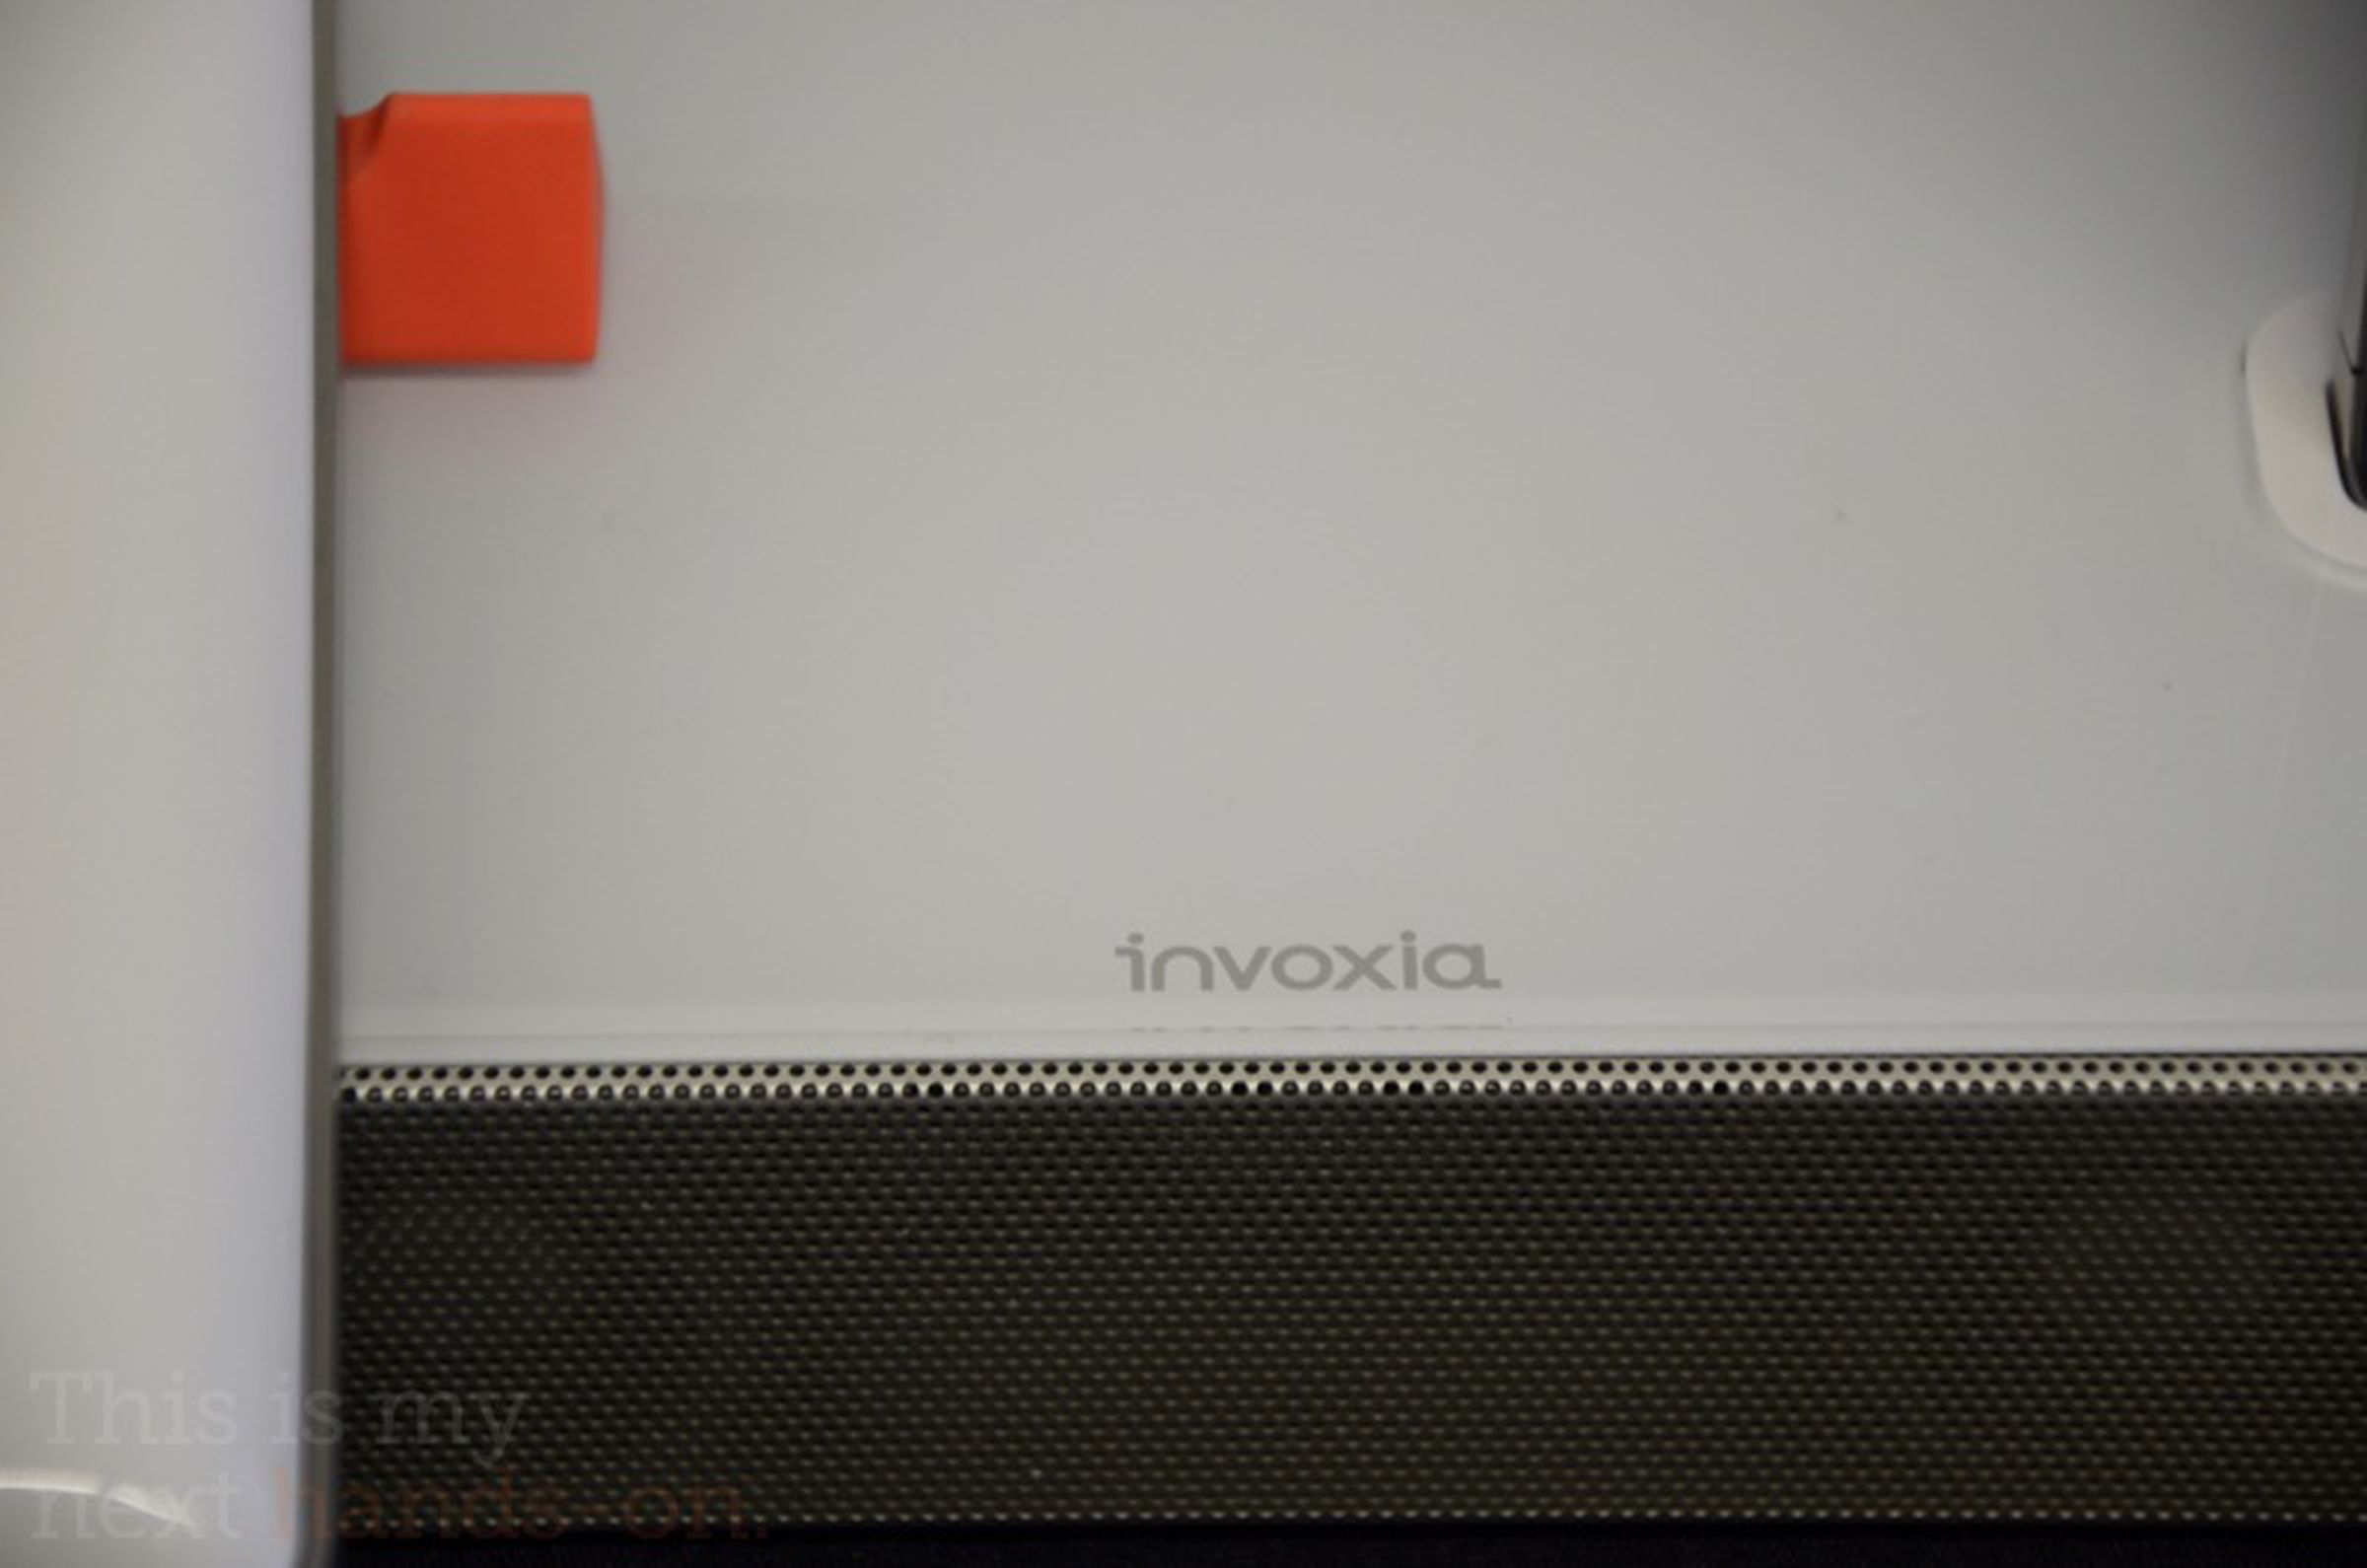 Invoxia NVX 610 desktop phone photos